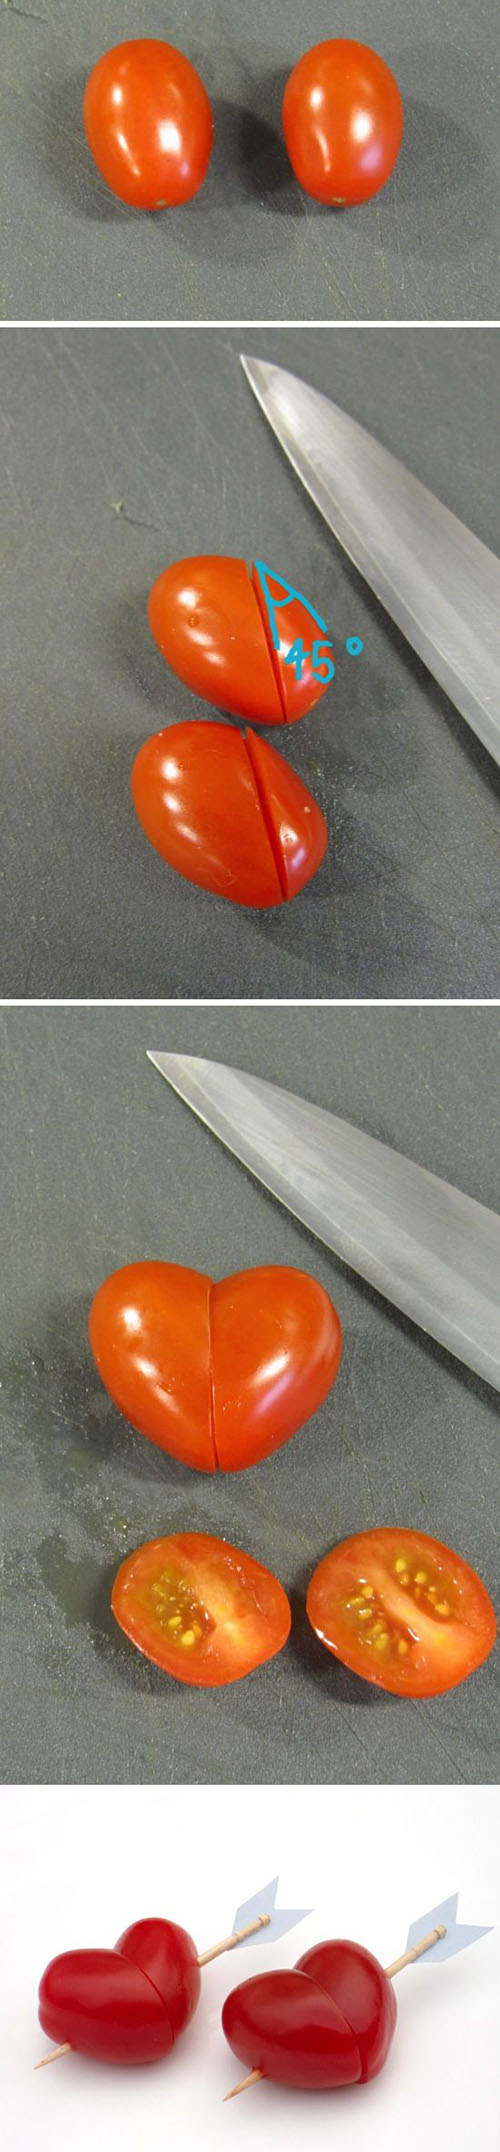 20 Heart Shaped Cherry Tomatoes 2eefd2